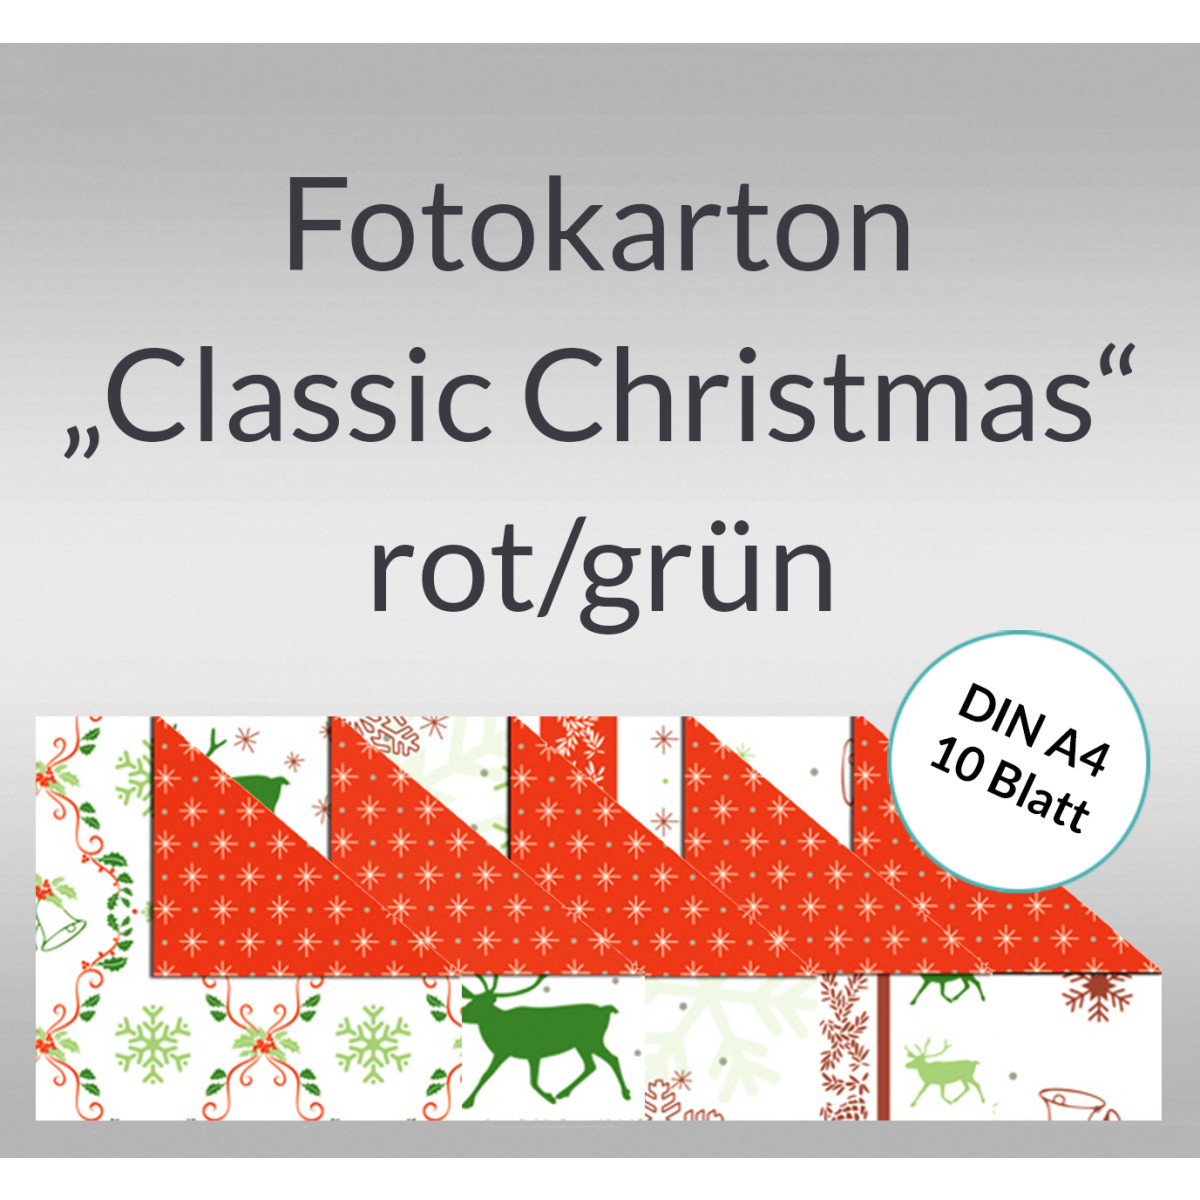 Fotokarton "Classic Christmas" rot/grün DIN A4 - 10 Blatt